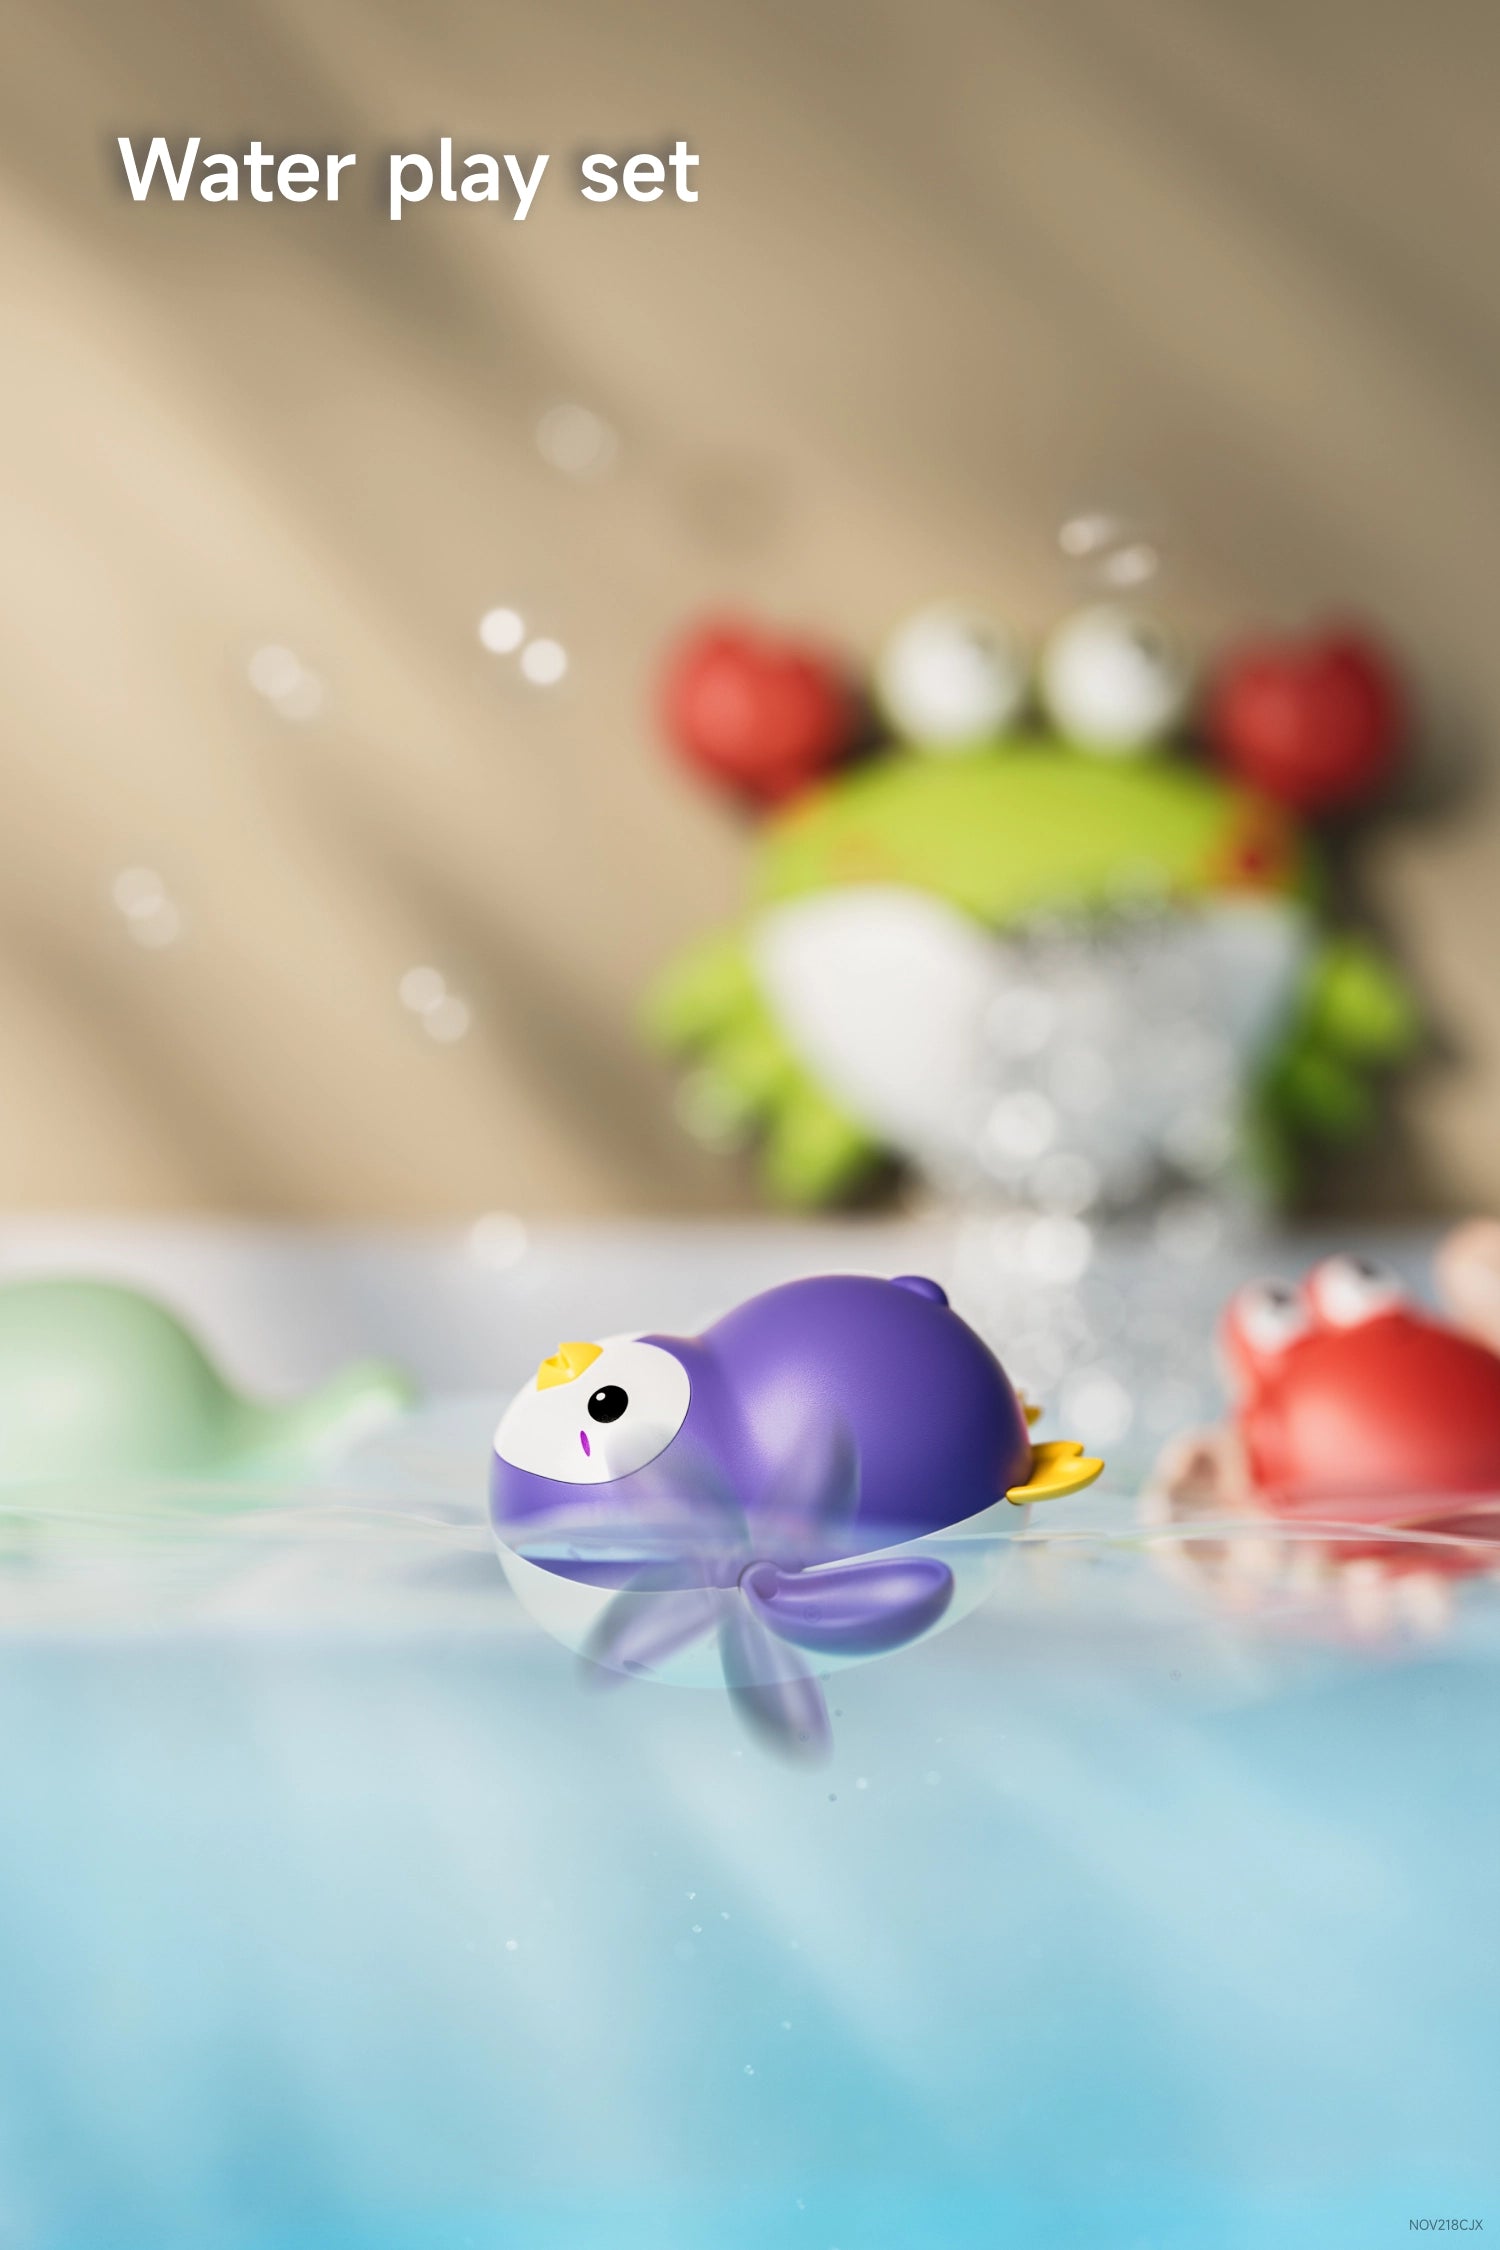 Automatic crab bubble maker for entertaining bath experiences